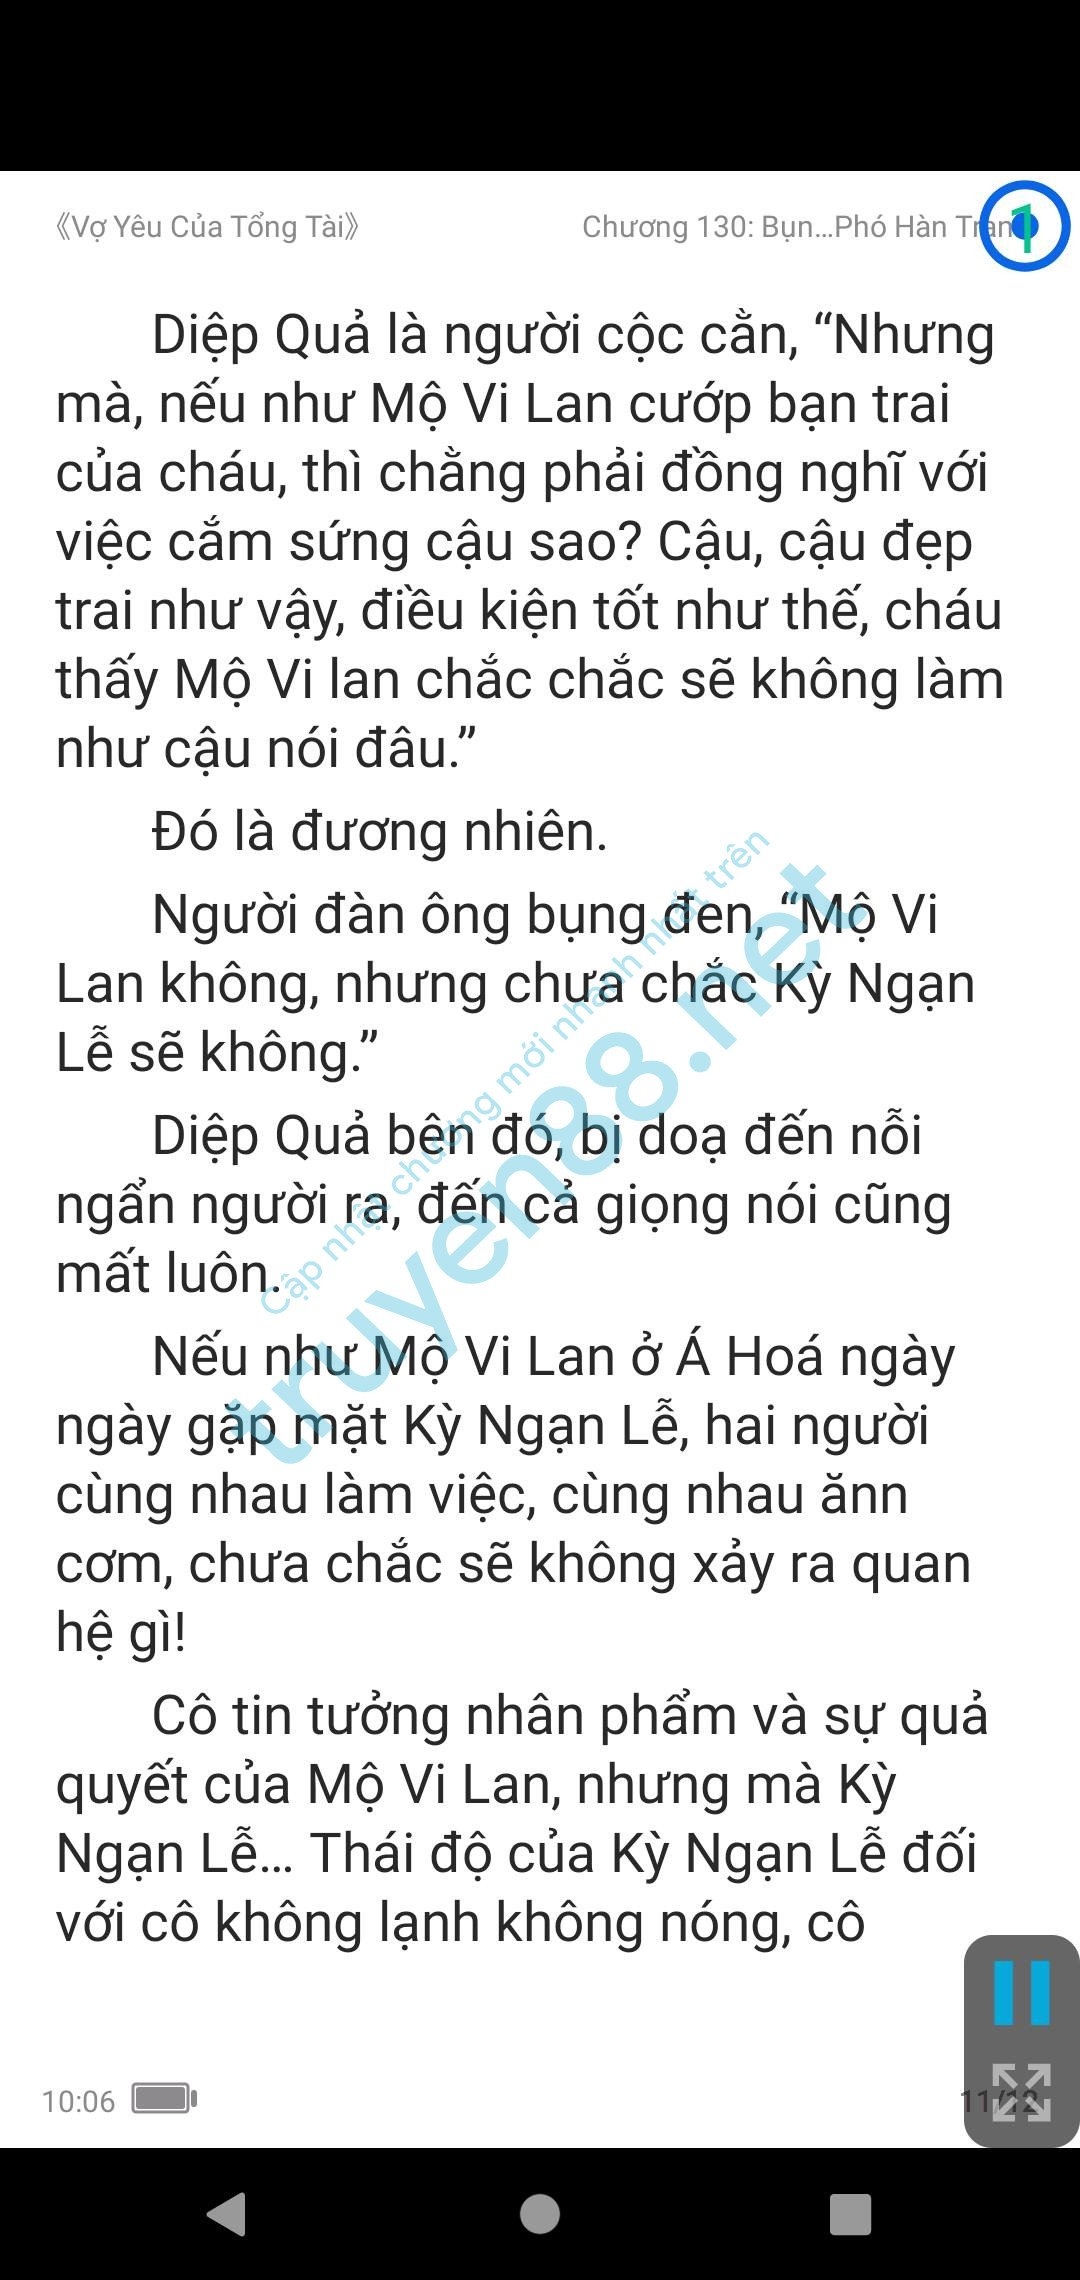 vo-yeu-cua-tong-tai-mo-vi-lan--pho-han-tranh-130-2